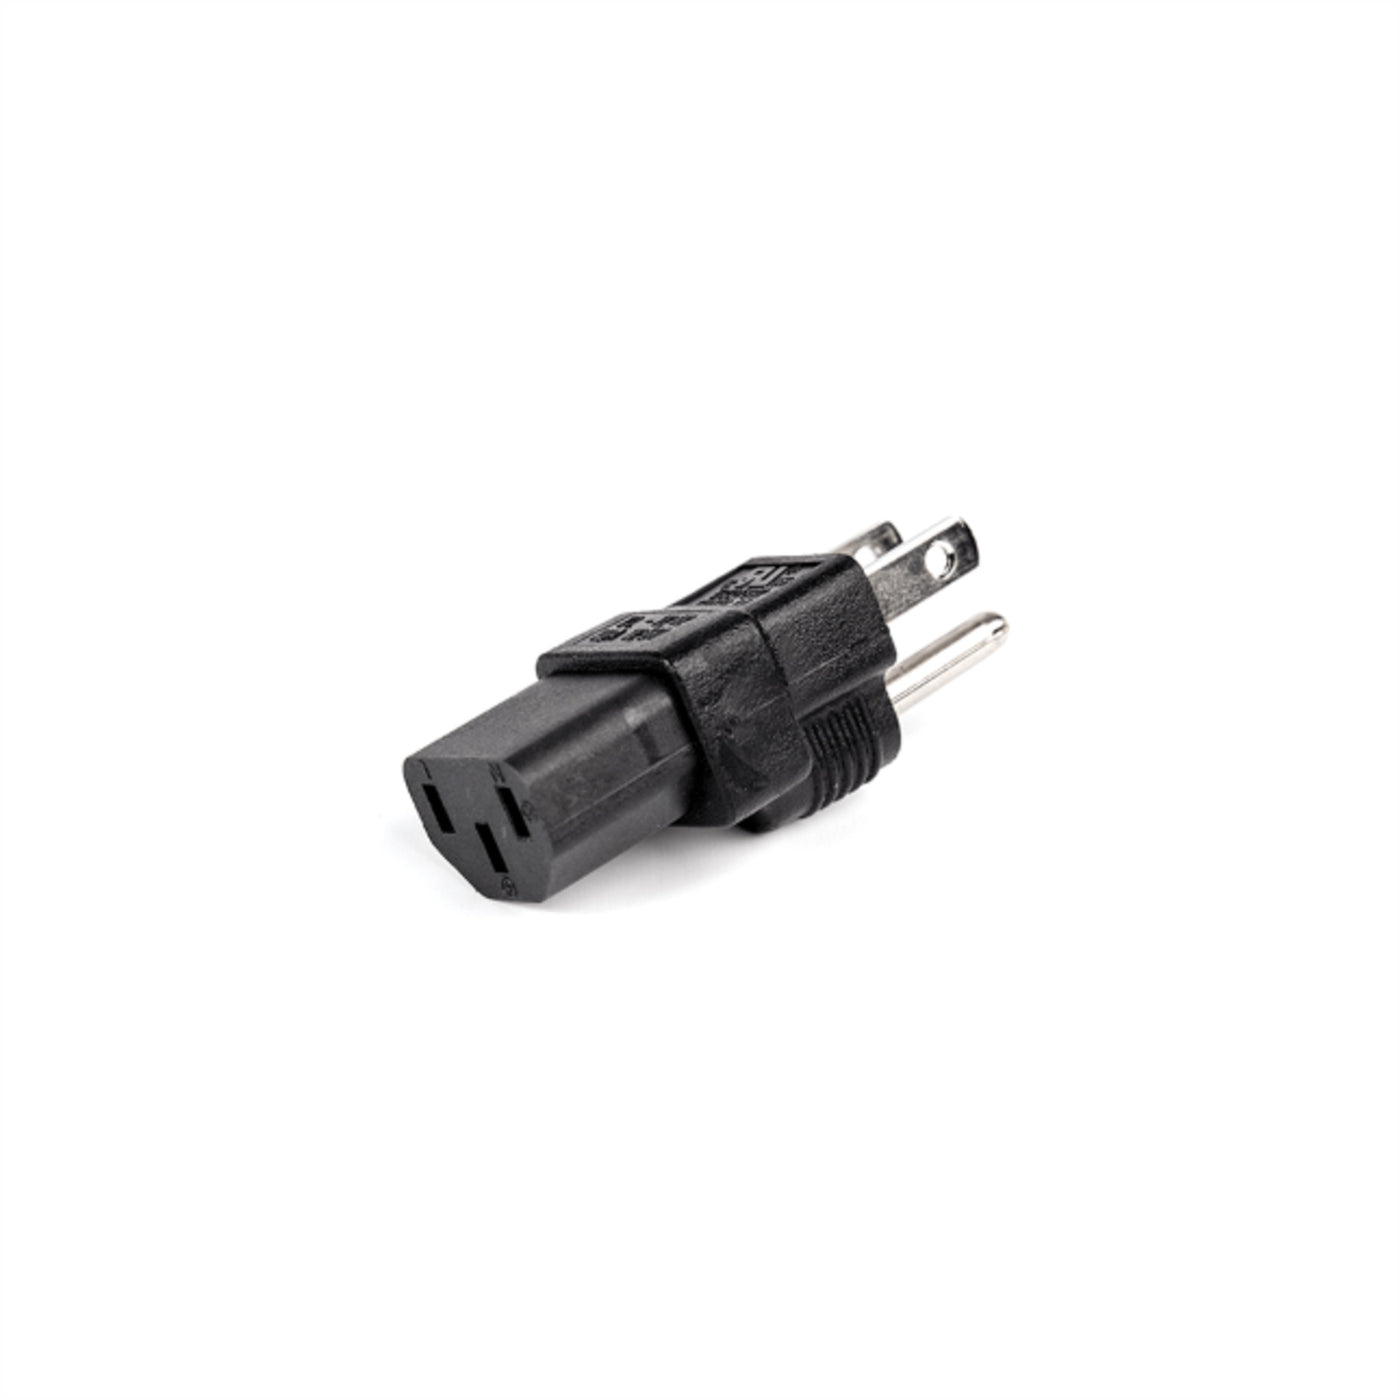 D'Addario IEC-NEMA Plug Adapter (North America) (PW-IECBA-01)